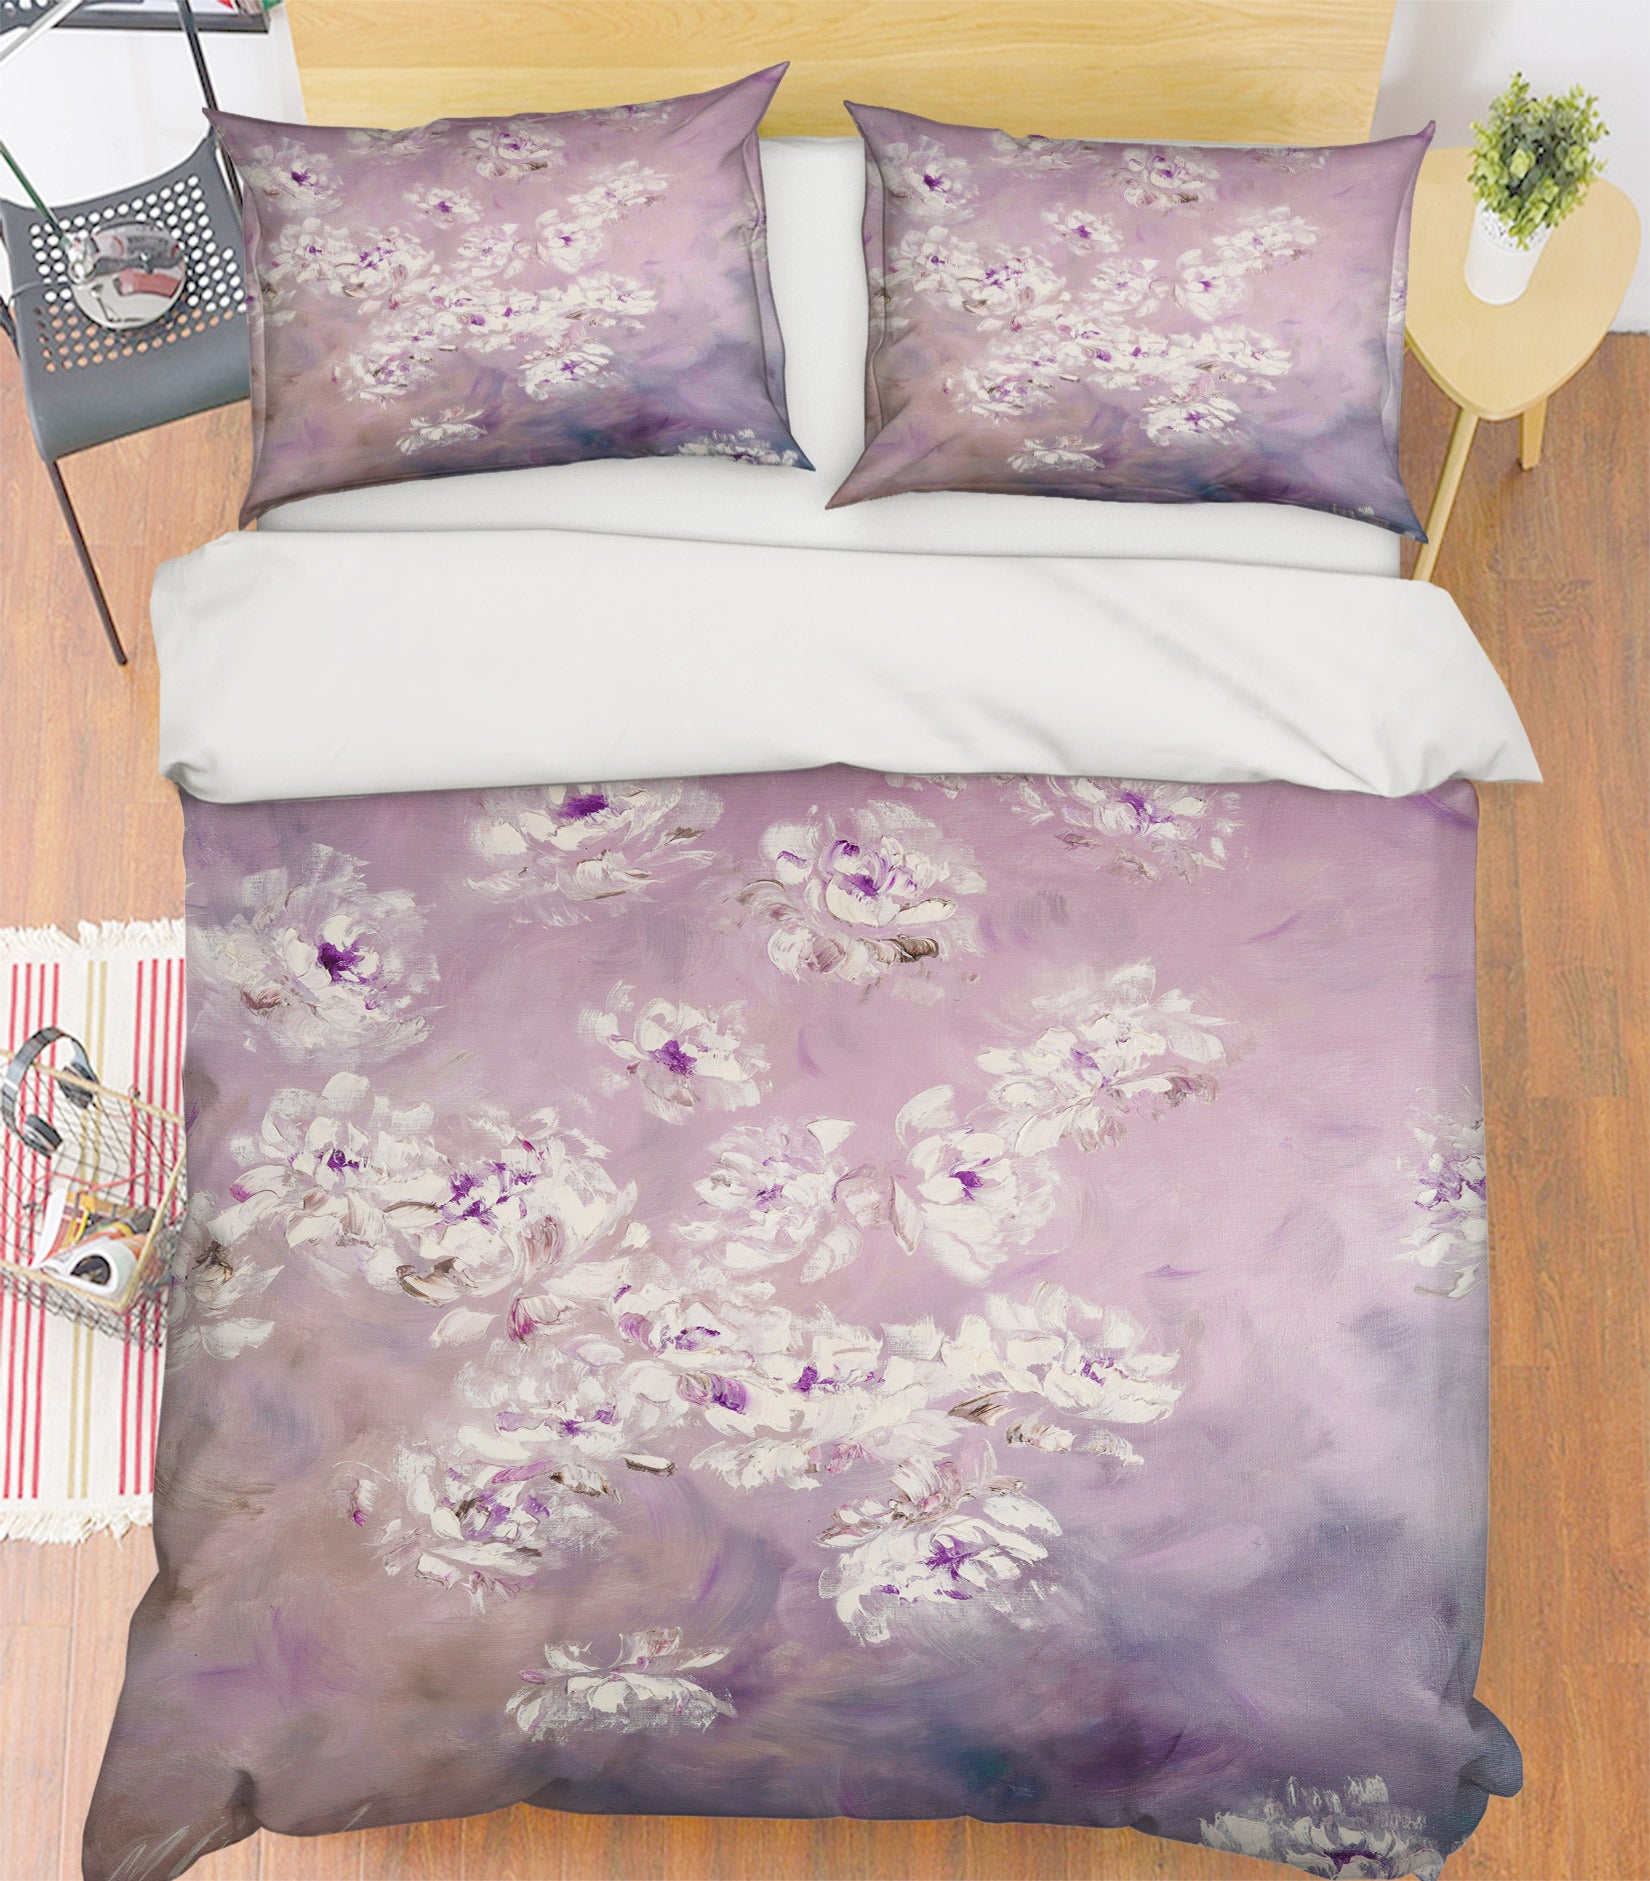 3D Pink Flower 515 Skromova Marina Bedding Bed Pillowcases Quilt